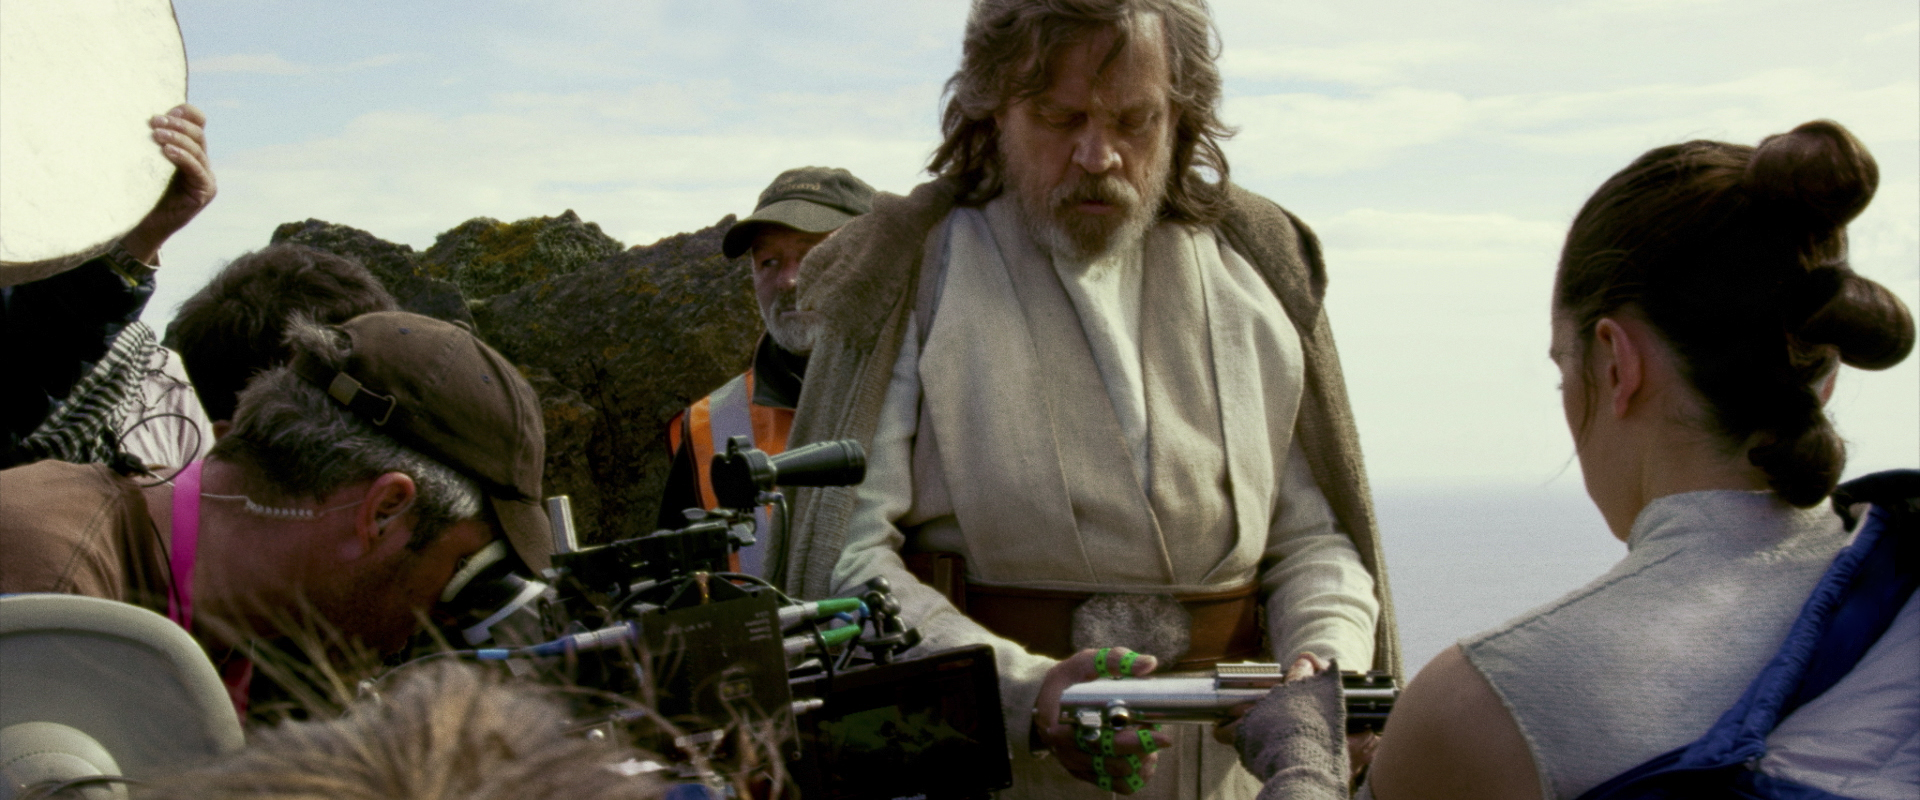 Star Wars: The Last Jedi Behind-The-Scenes still (Walt Disney Studios Home Entertainment)